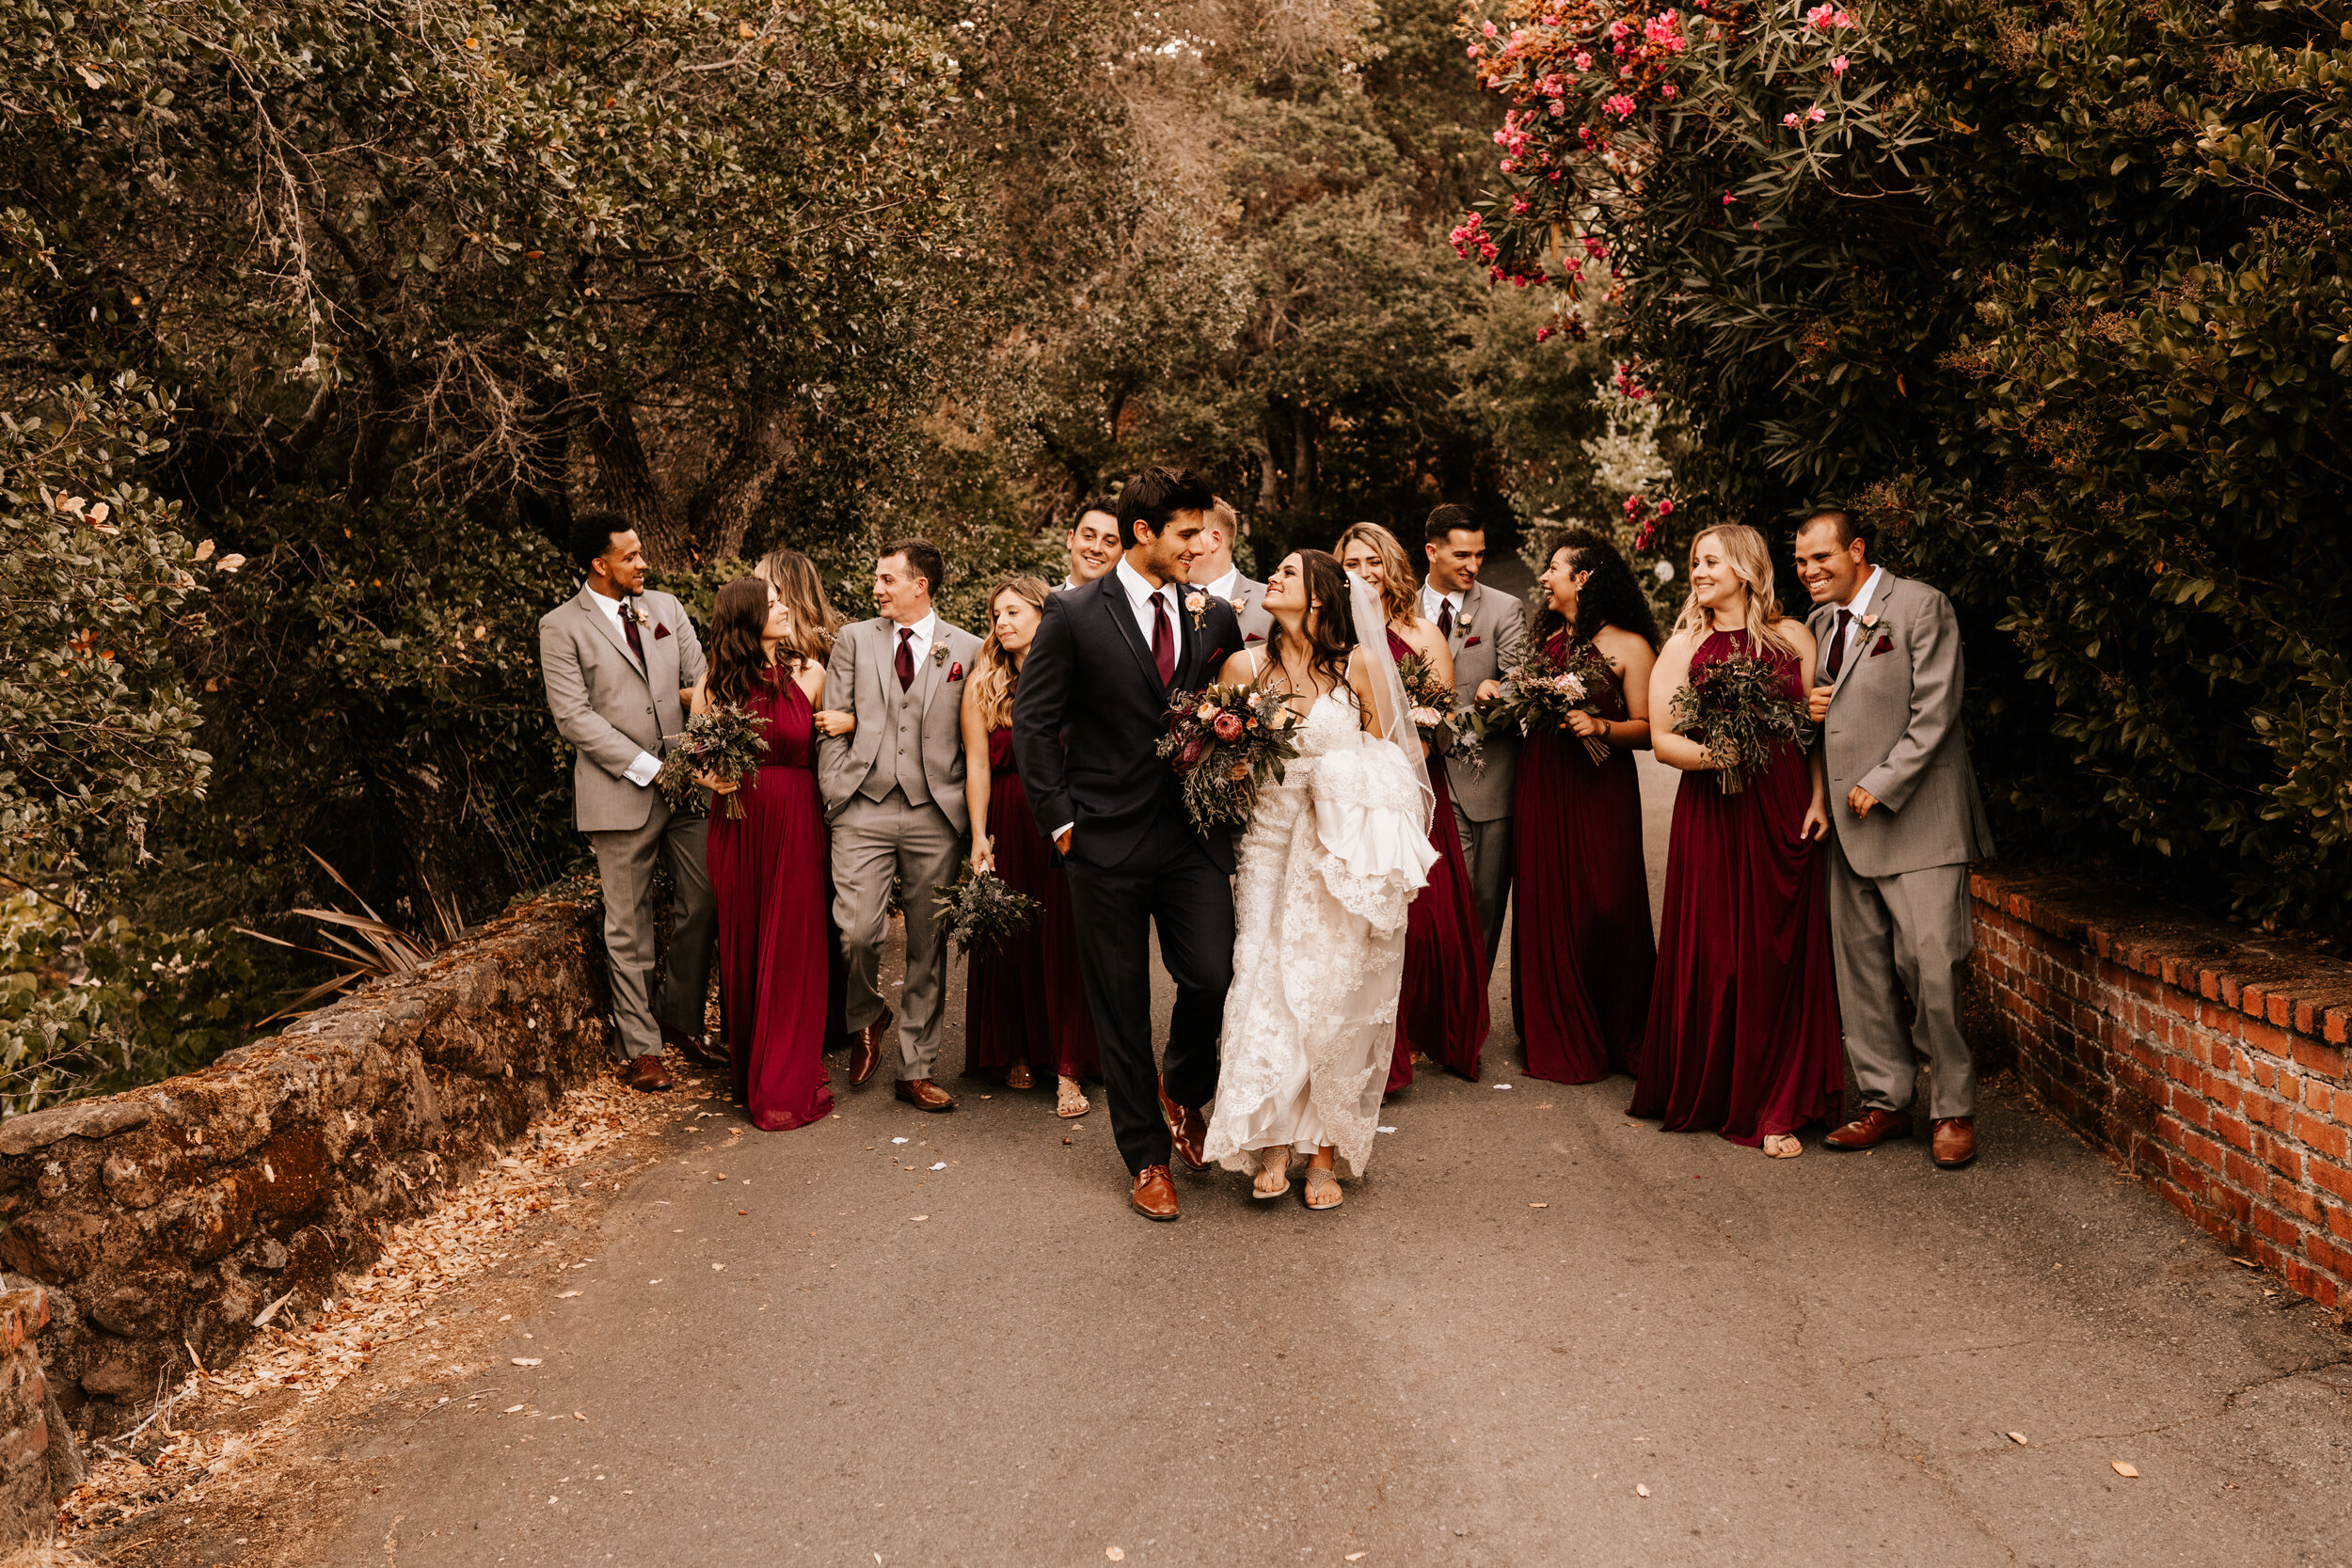 Kylee + Andrew -  Ross, California Backyard Summer Wedding156.jpg